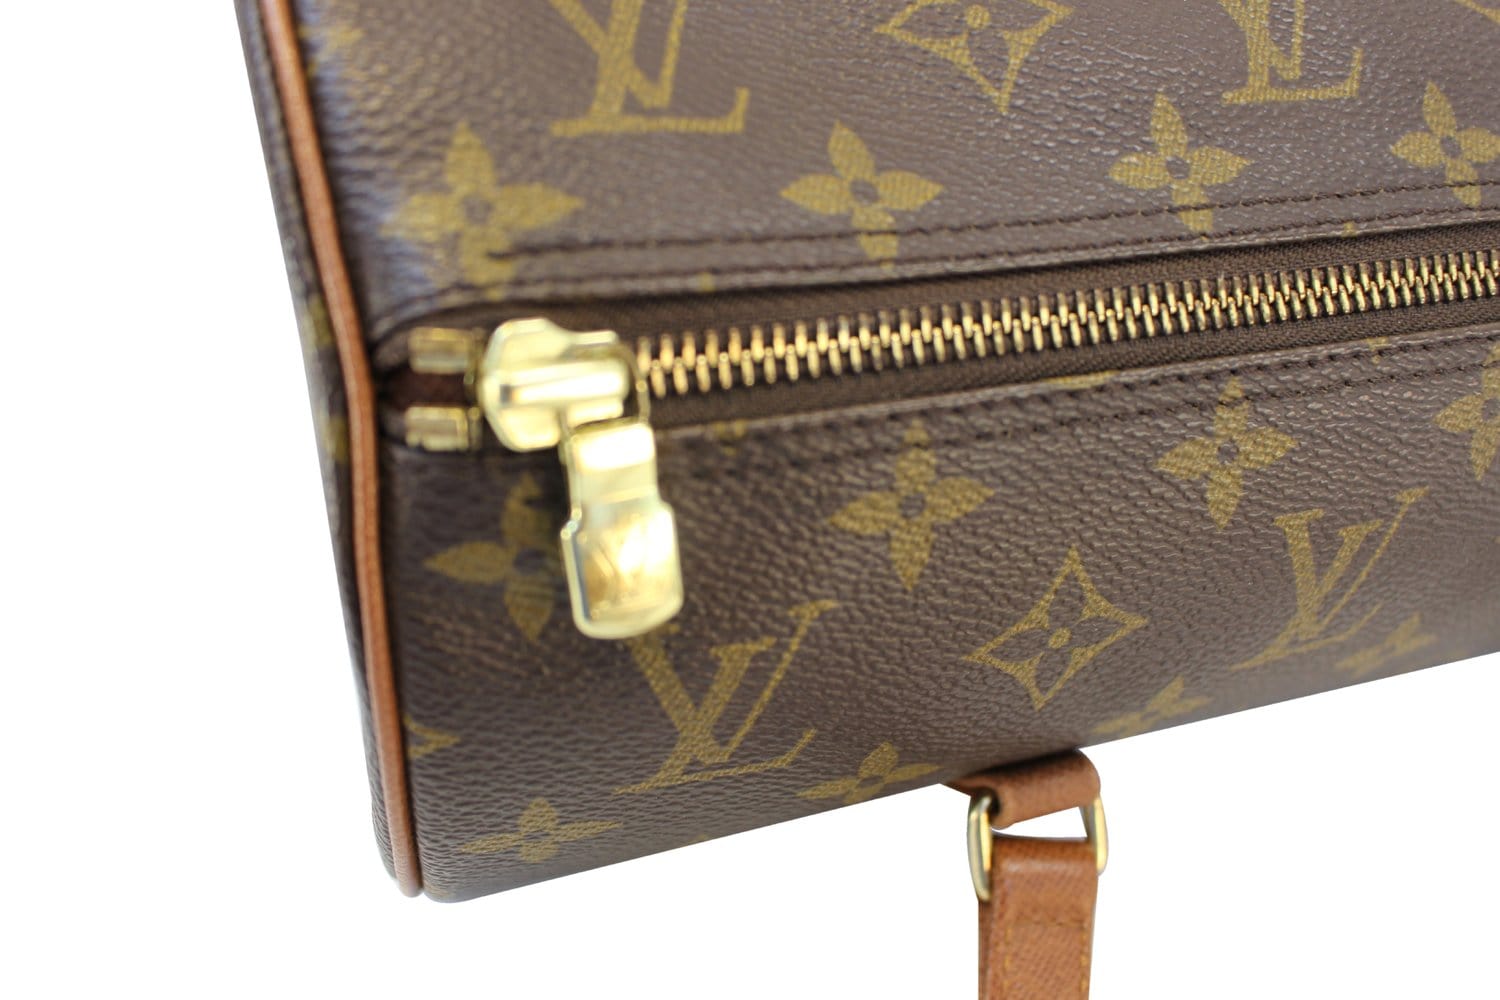 Papillon leather handbag Louis Vuitton Brown in Leather - 36609330